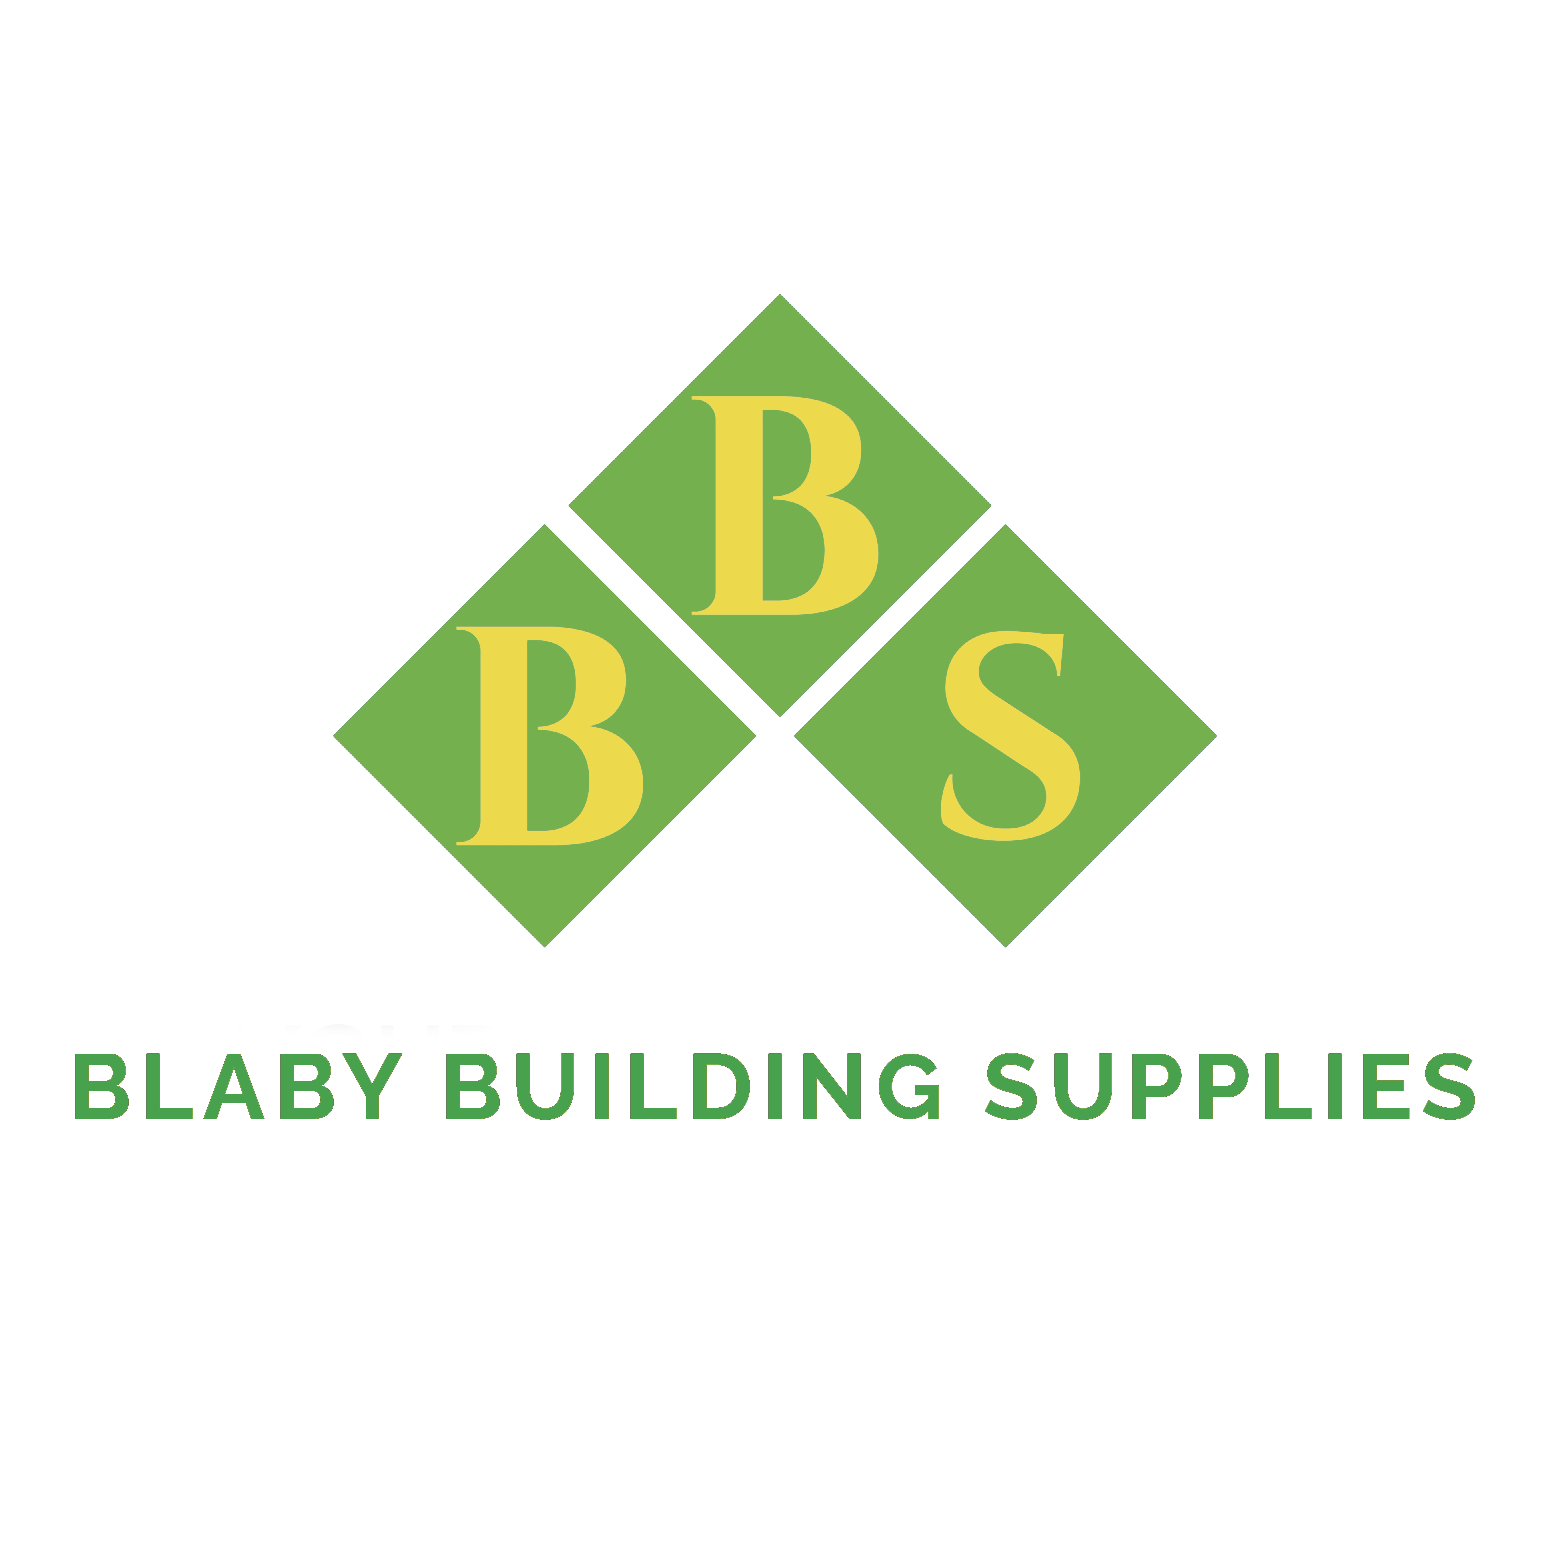 (c) Blabybuildingsupplies.co.uk